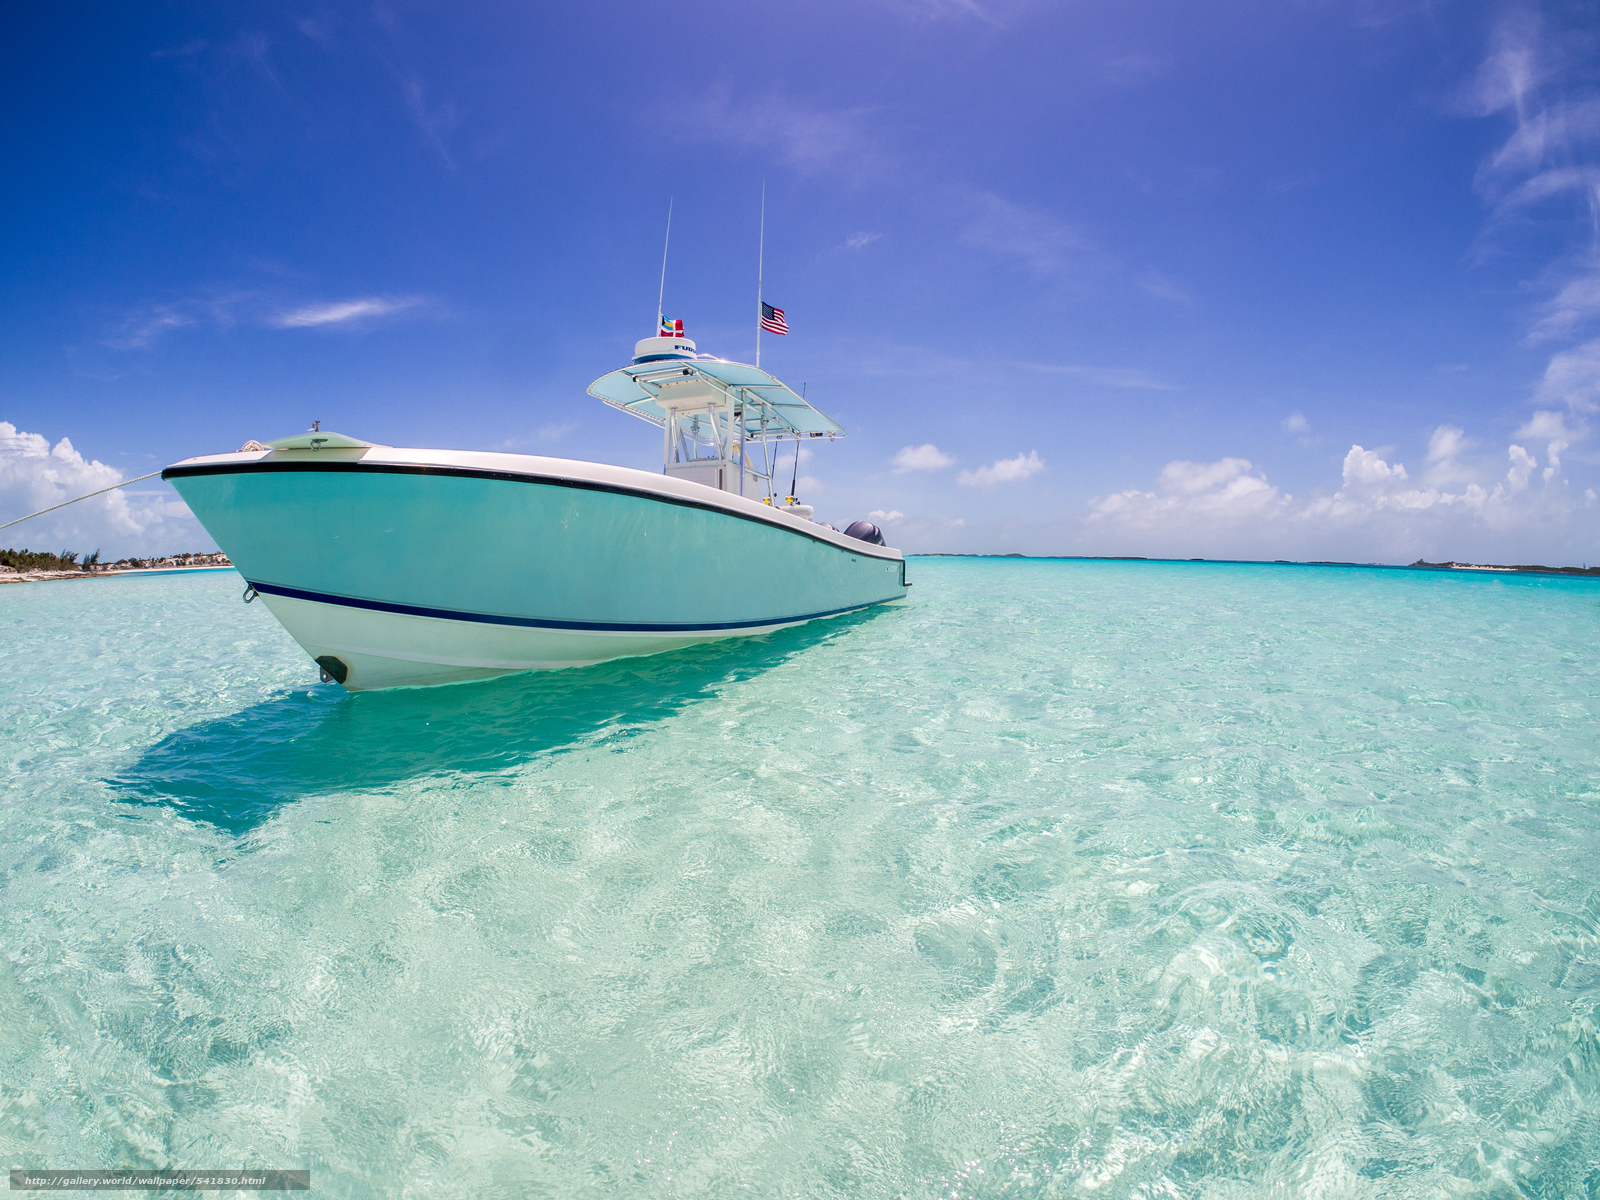 Download wallpaper yacht xhuma Islands Bahamas caribbean sea free